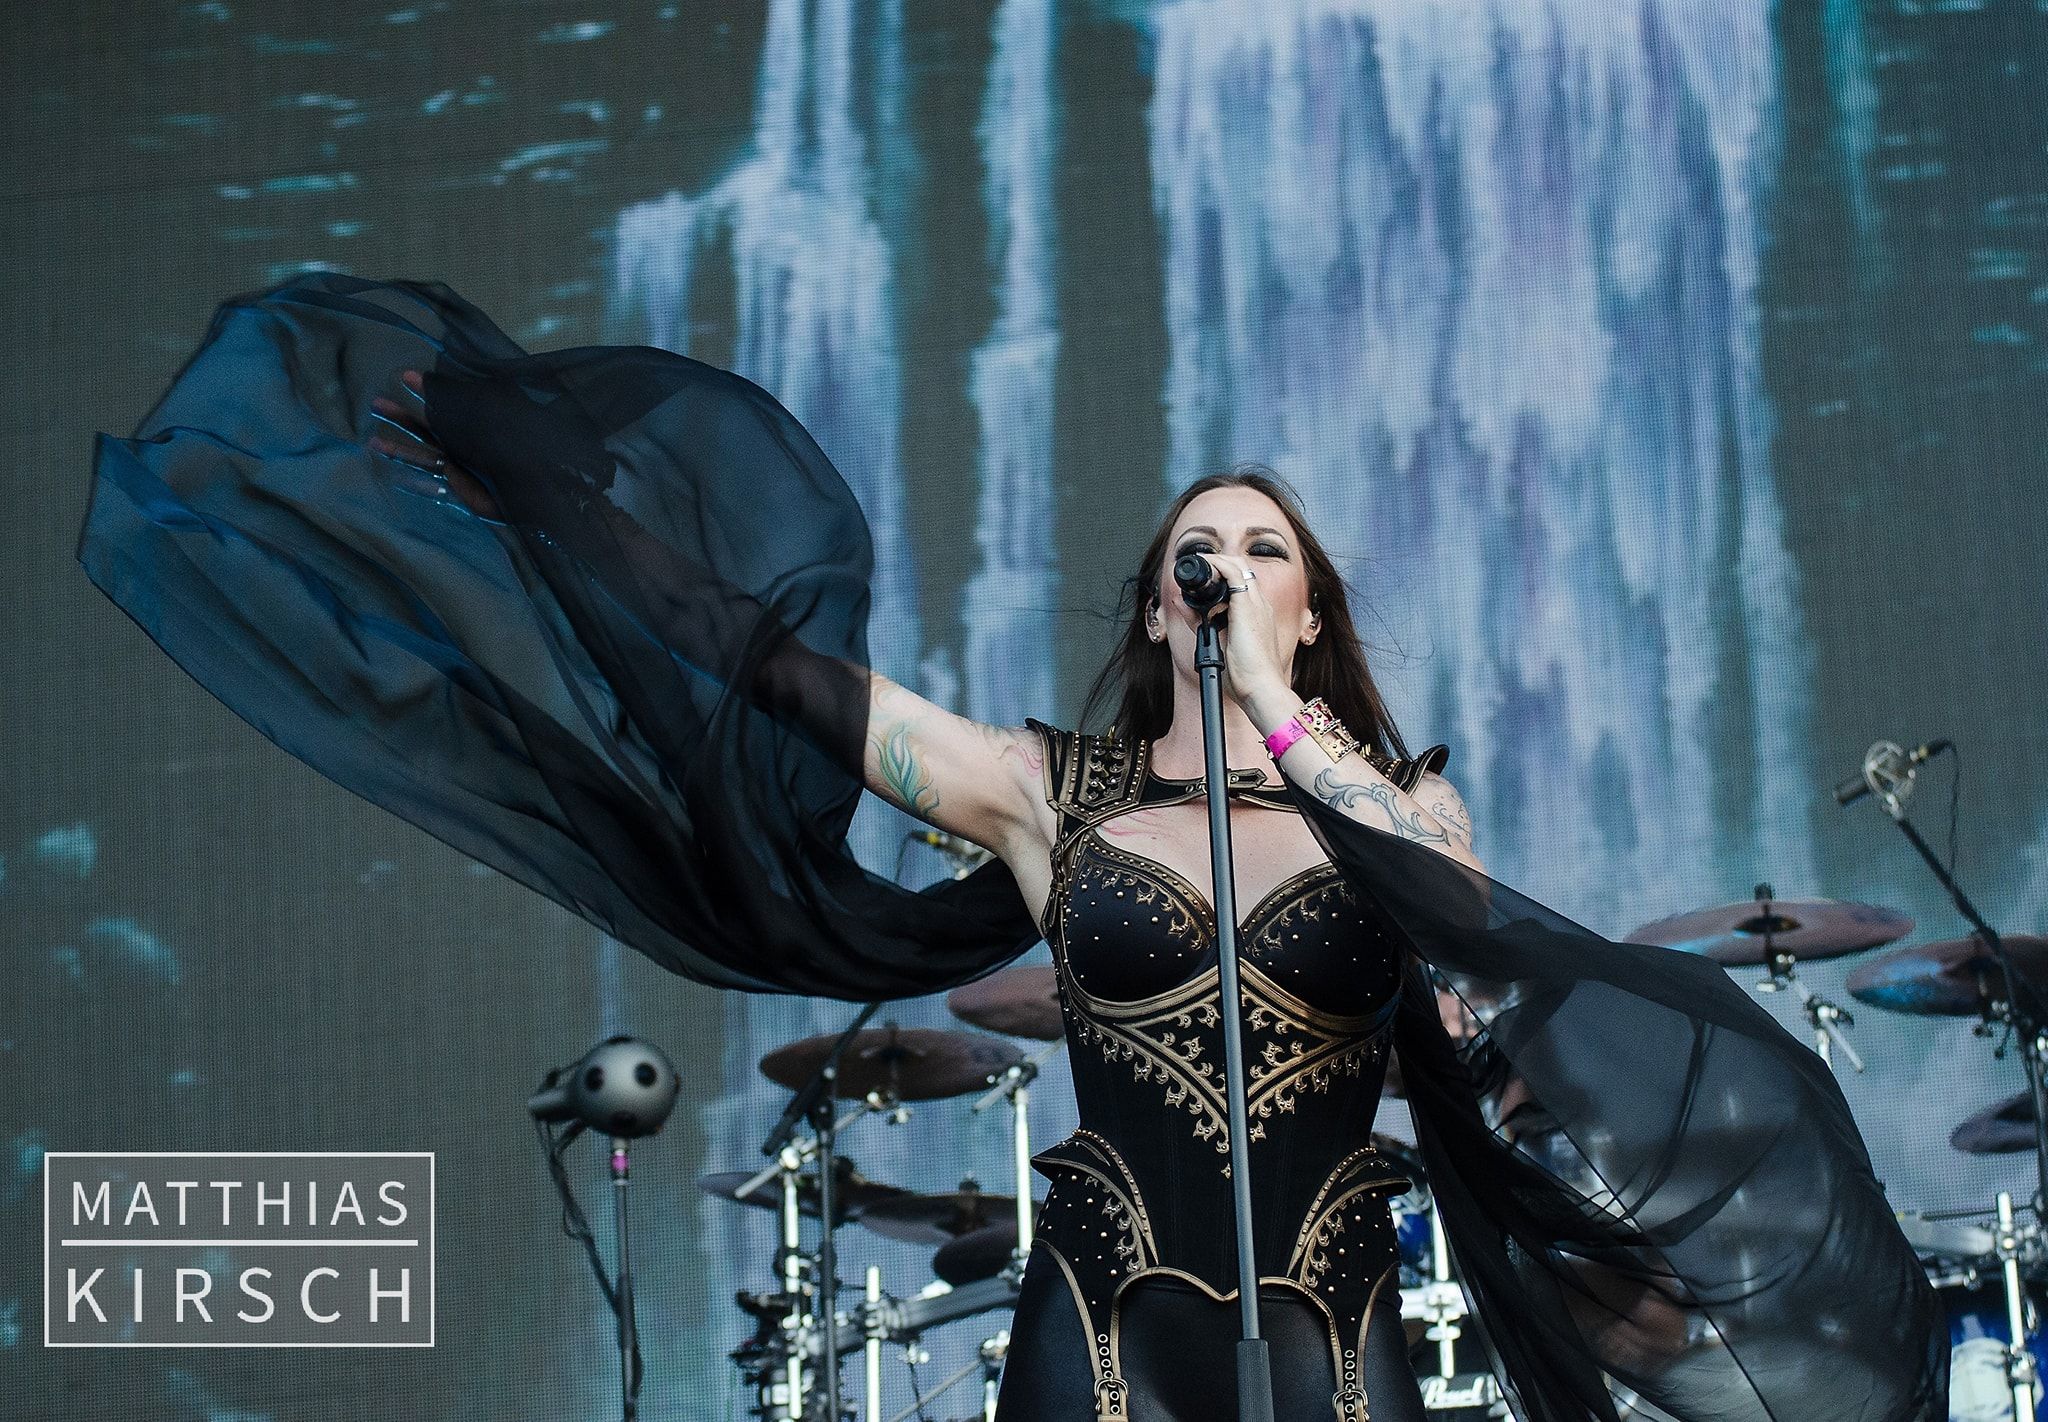 Cute Floor Jansen live with Nightwish in Wacken Open Air 2018 Tour - Rock festivals, Symphonic metal